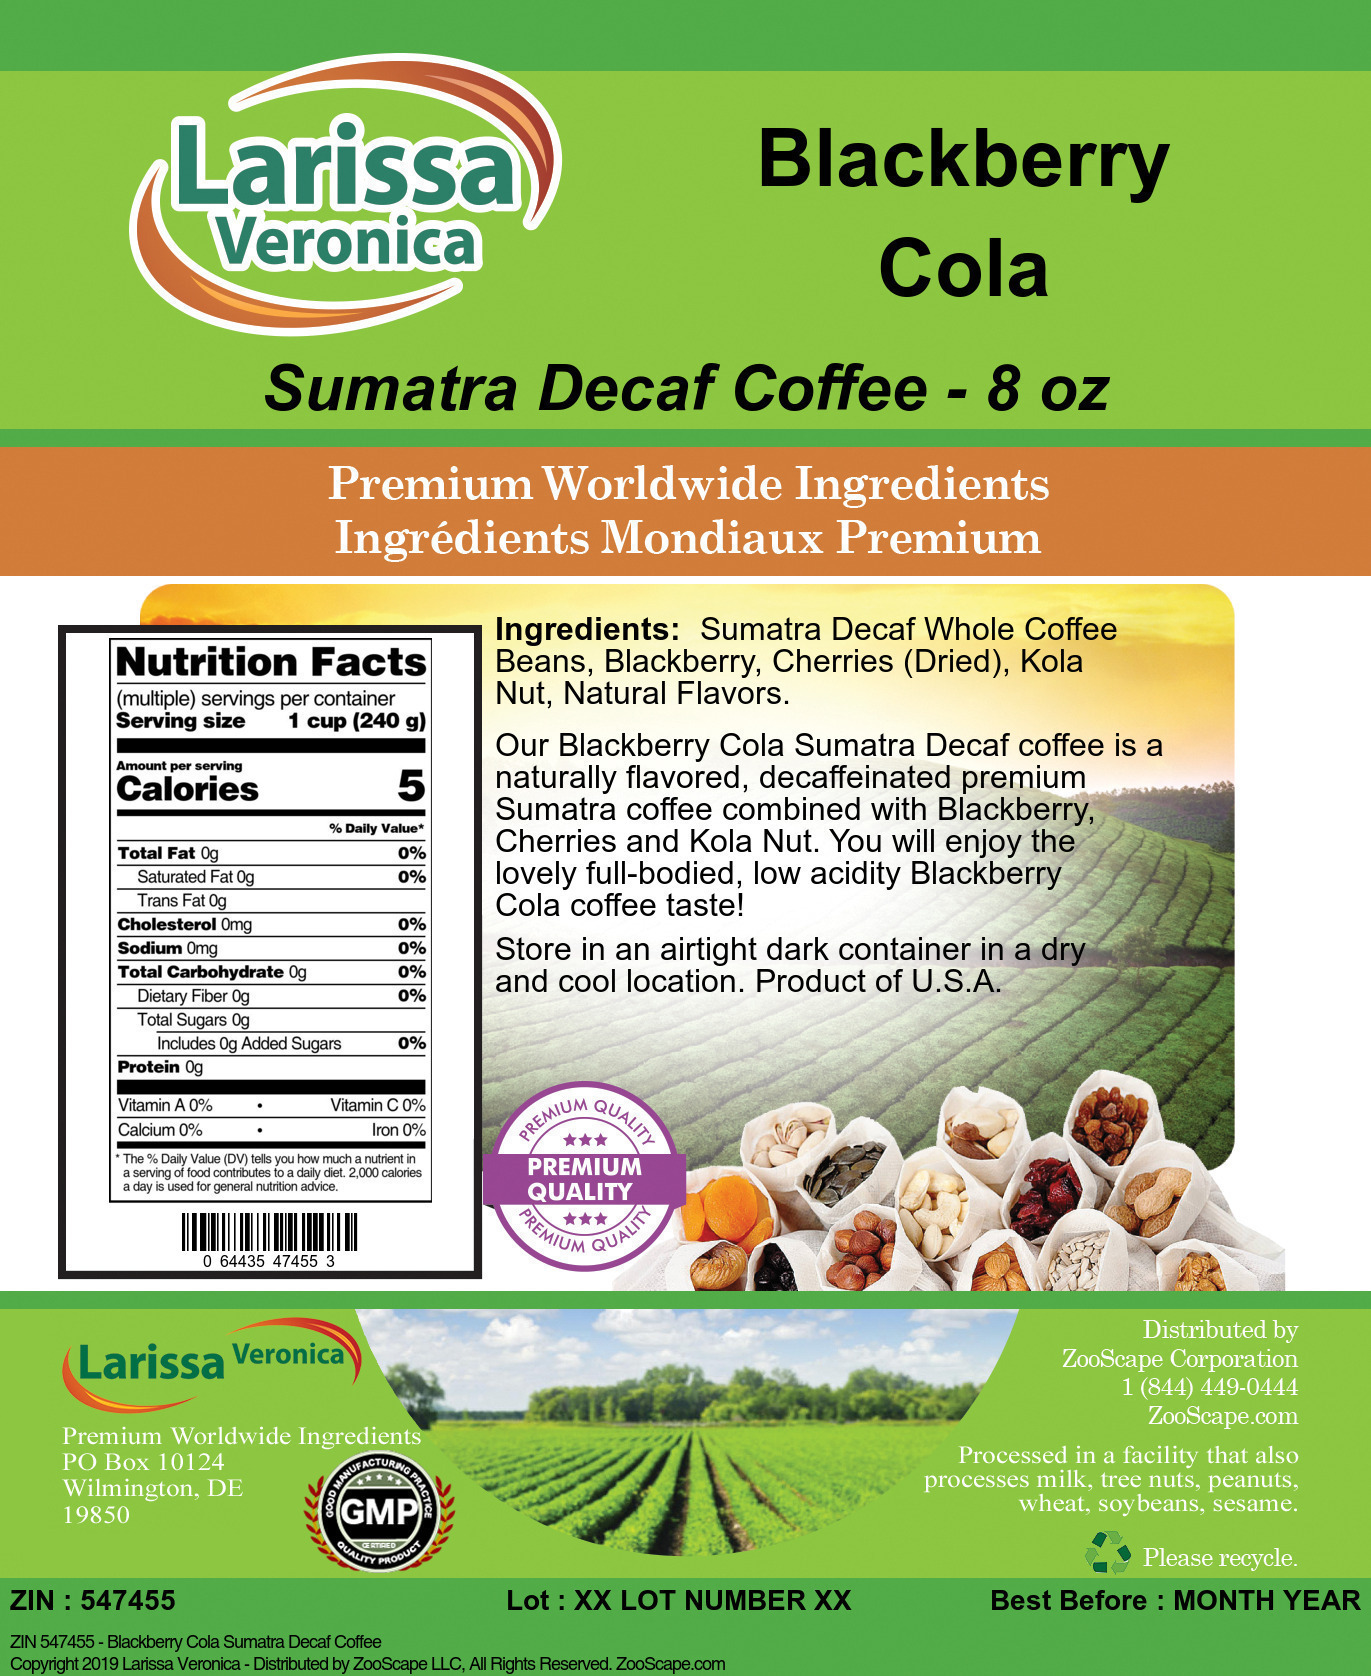 Blackberry Cola Sumatra Decaf Coffee - Label